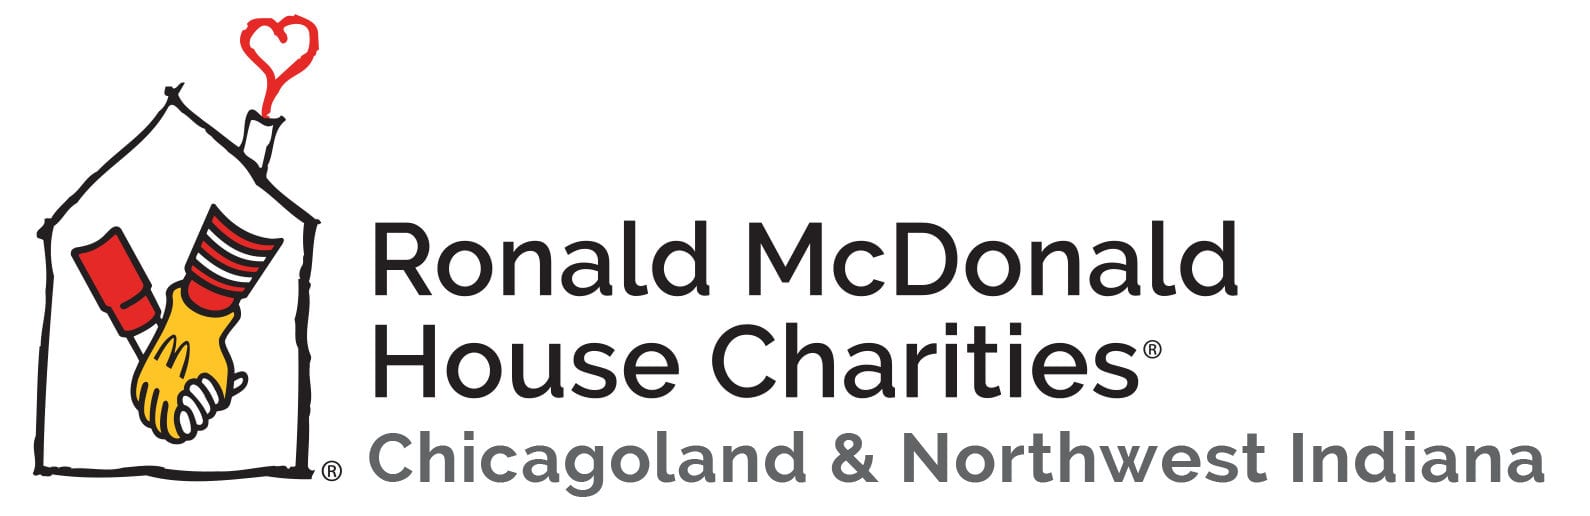 Ronald McDonald House Charities of Chicagoland & Northwest Indiana